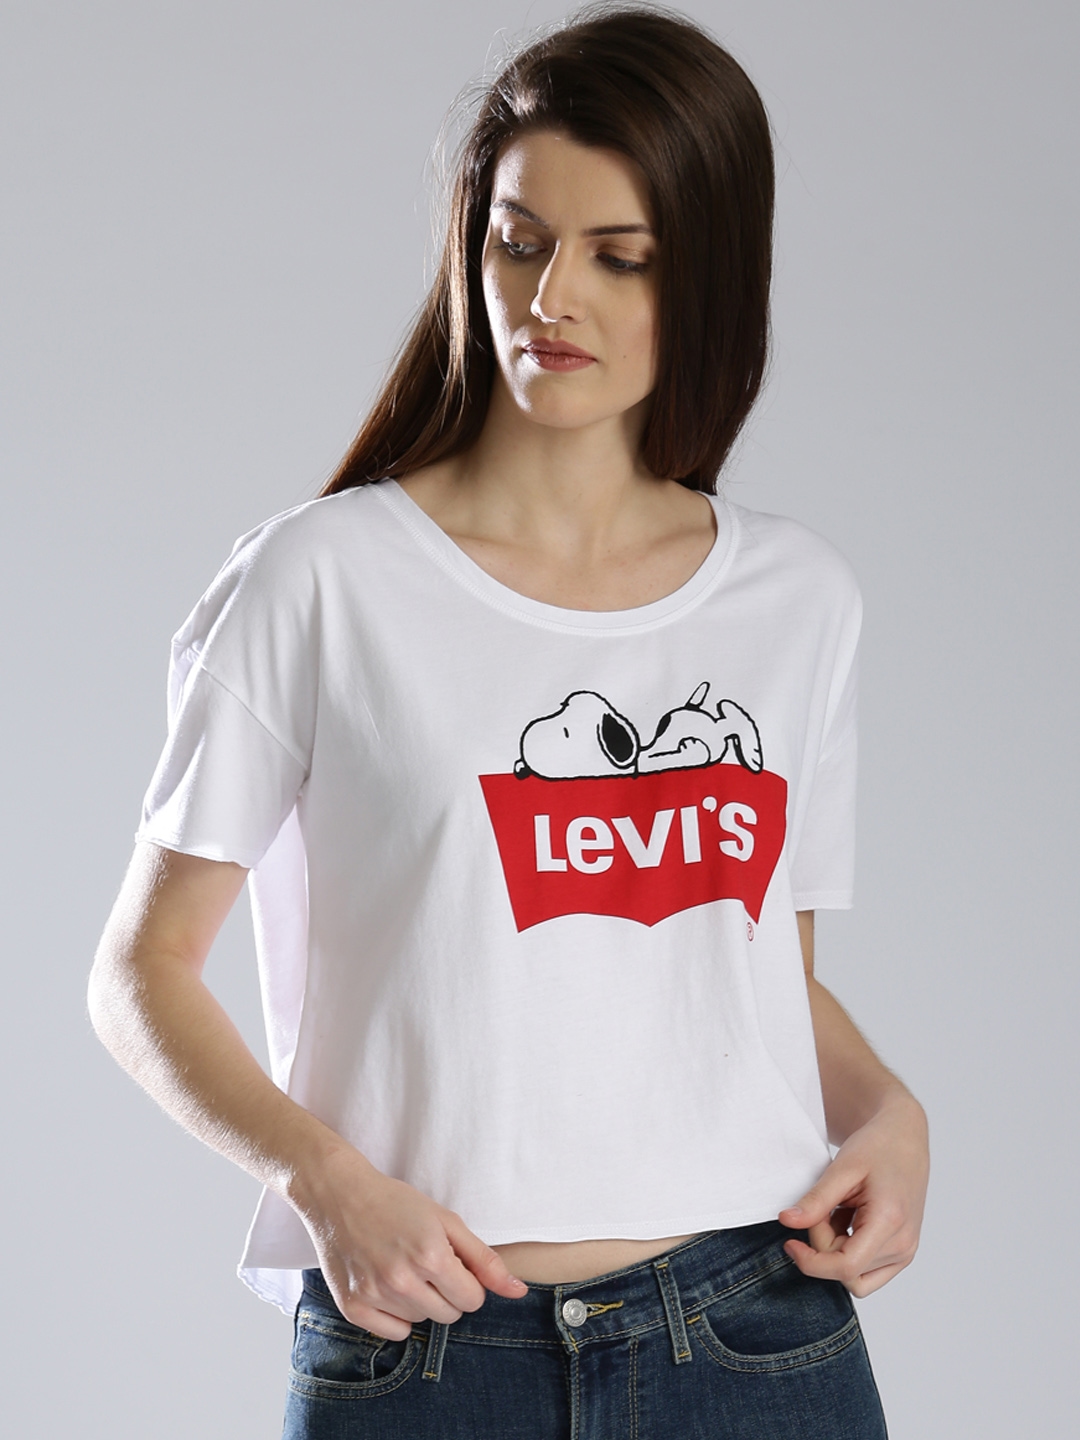 levis tshirt for women